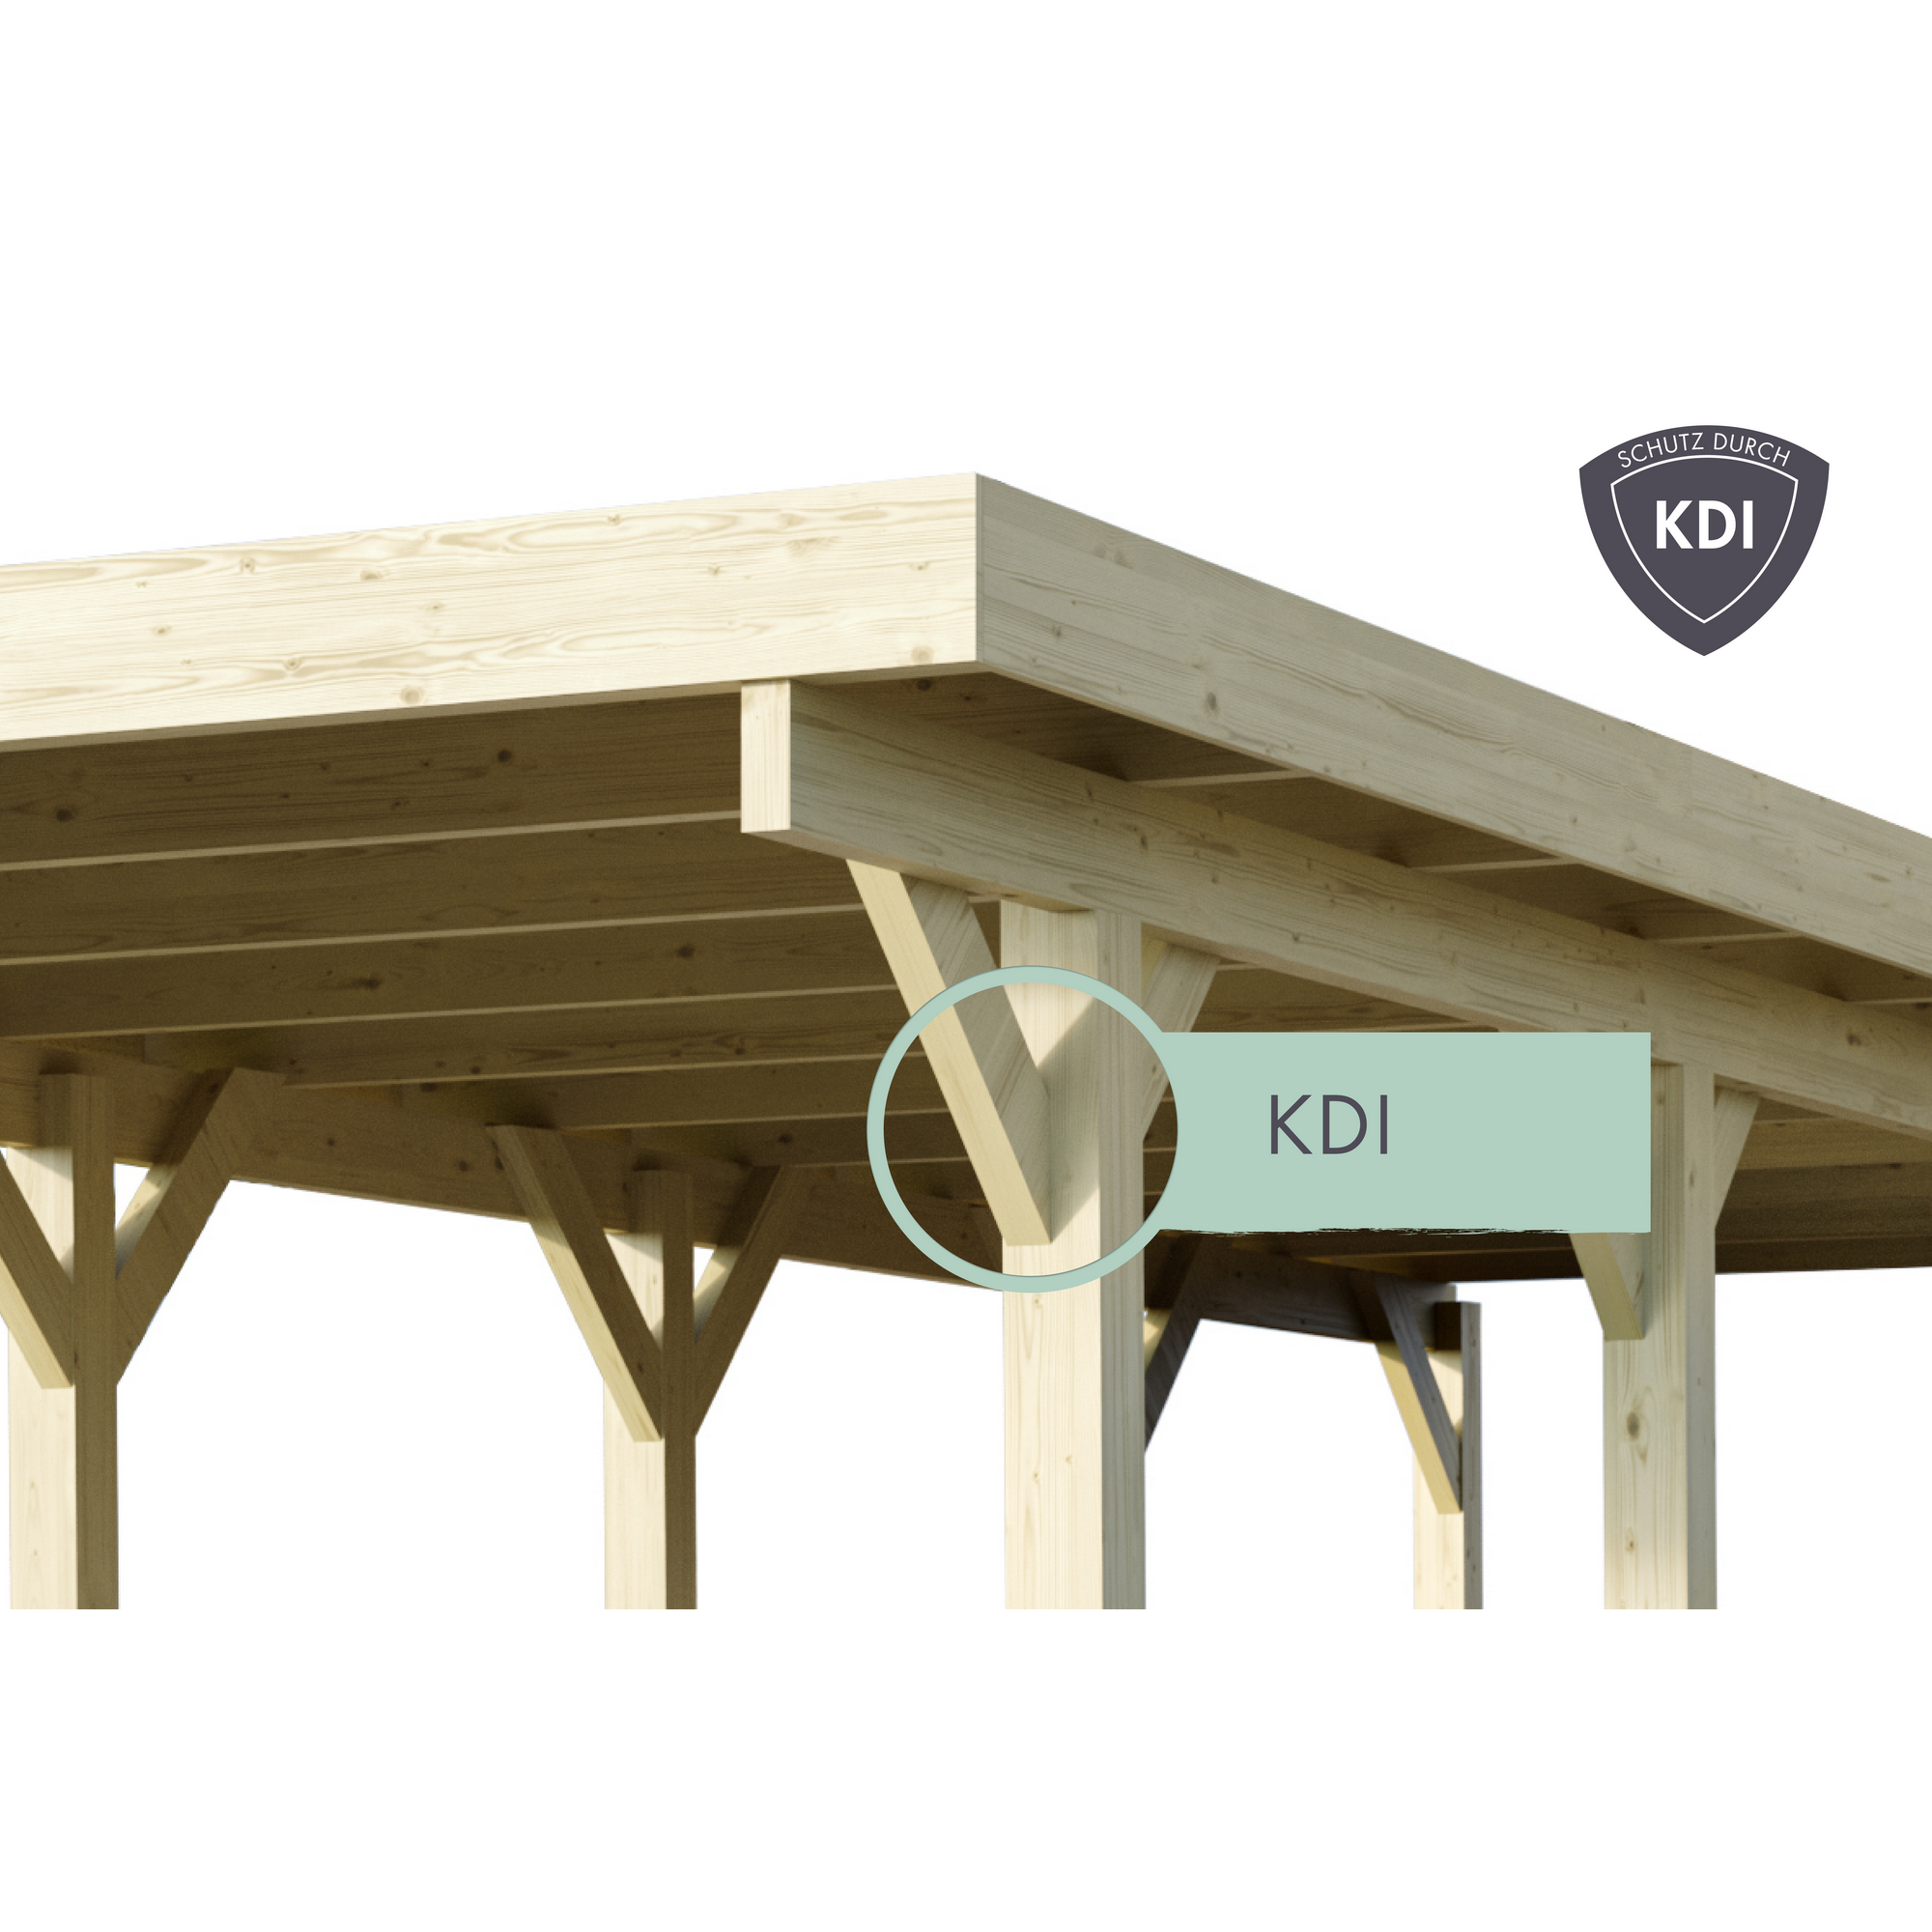 Doppelcarport 'Carlos 2' Kiefer PVC-Dach mit zwei Einfahrtsbögen 670 x 598 x 237 cm + product picture